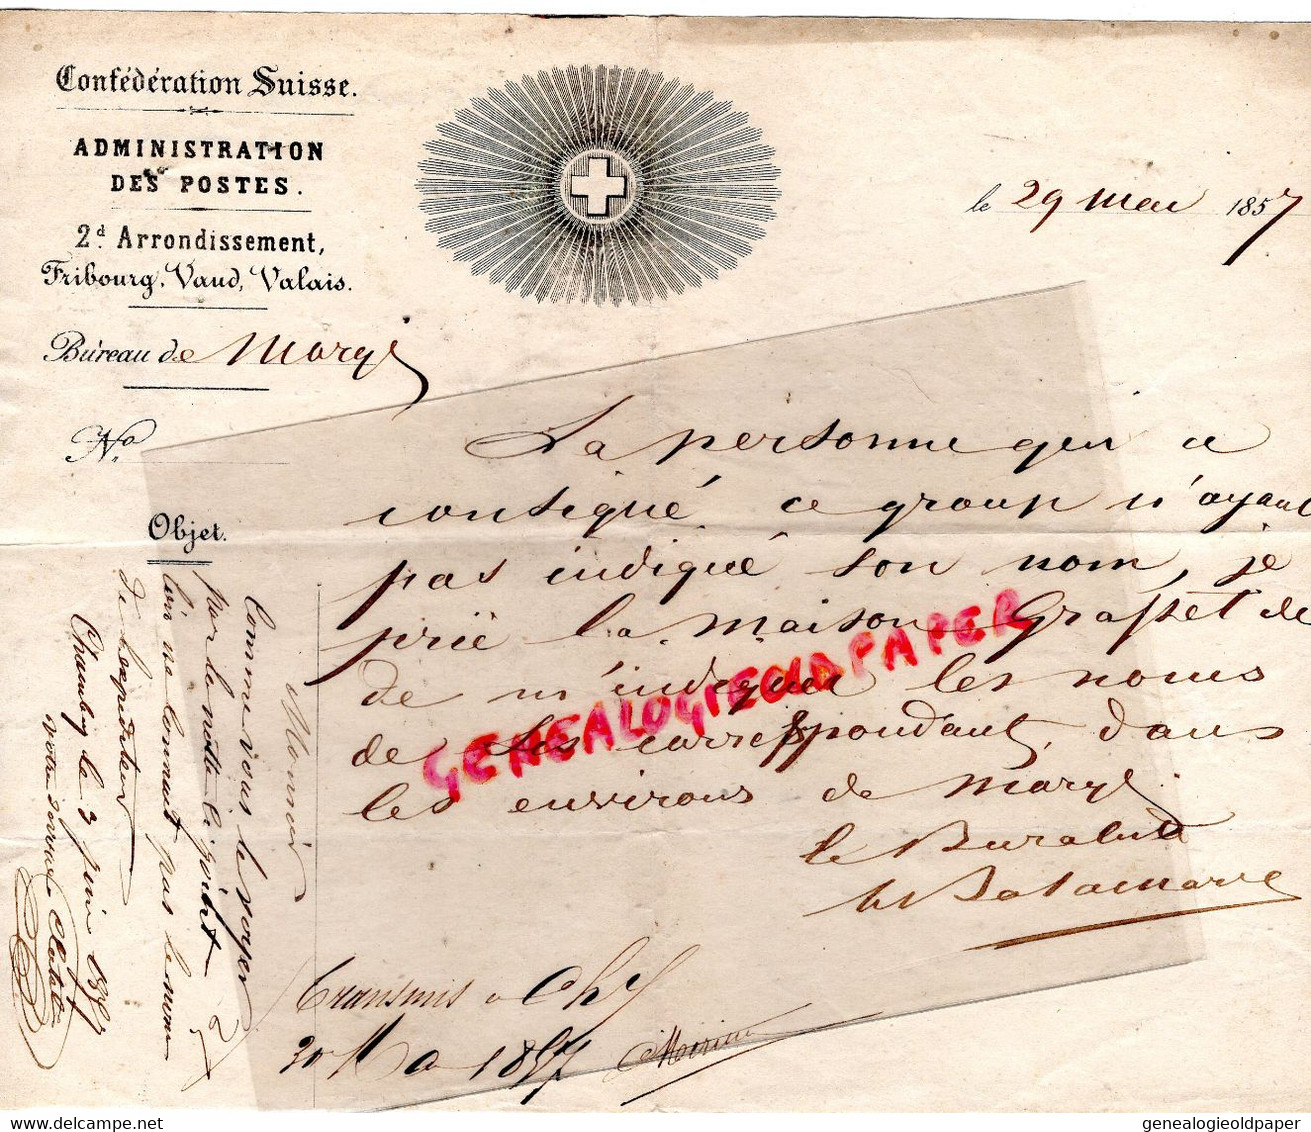 SUISSE- RARE LETTRE ADIMISTRATION DES POSTES-POSTE-FRIBOURG VAUD VALAIS-29 MAI 1857 - Documentos Históricos